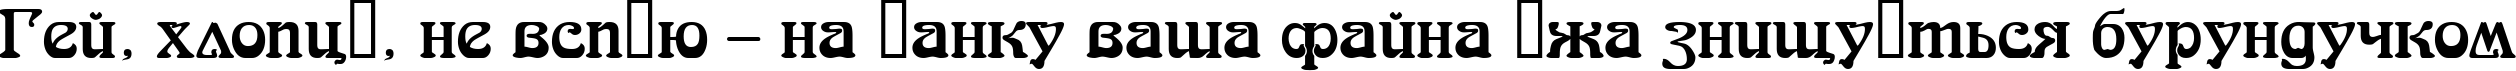 Пример написания шрифтом FairyTale текста на украинском